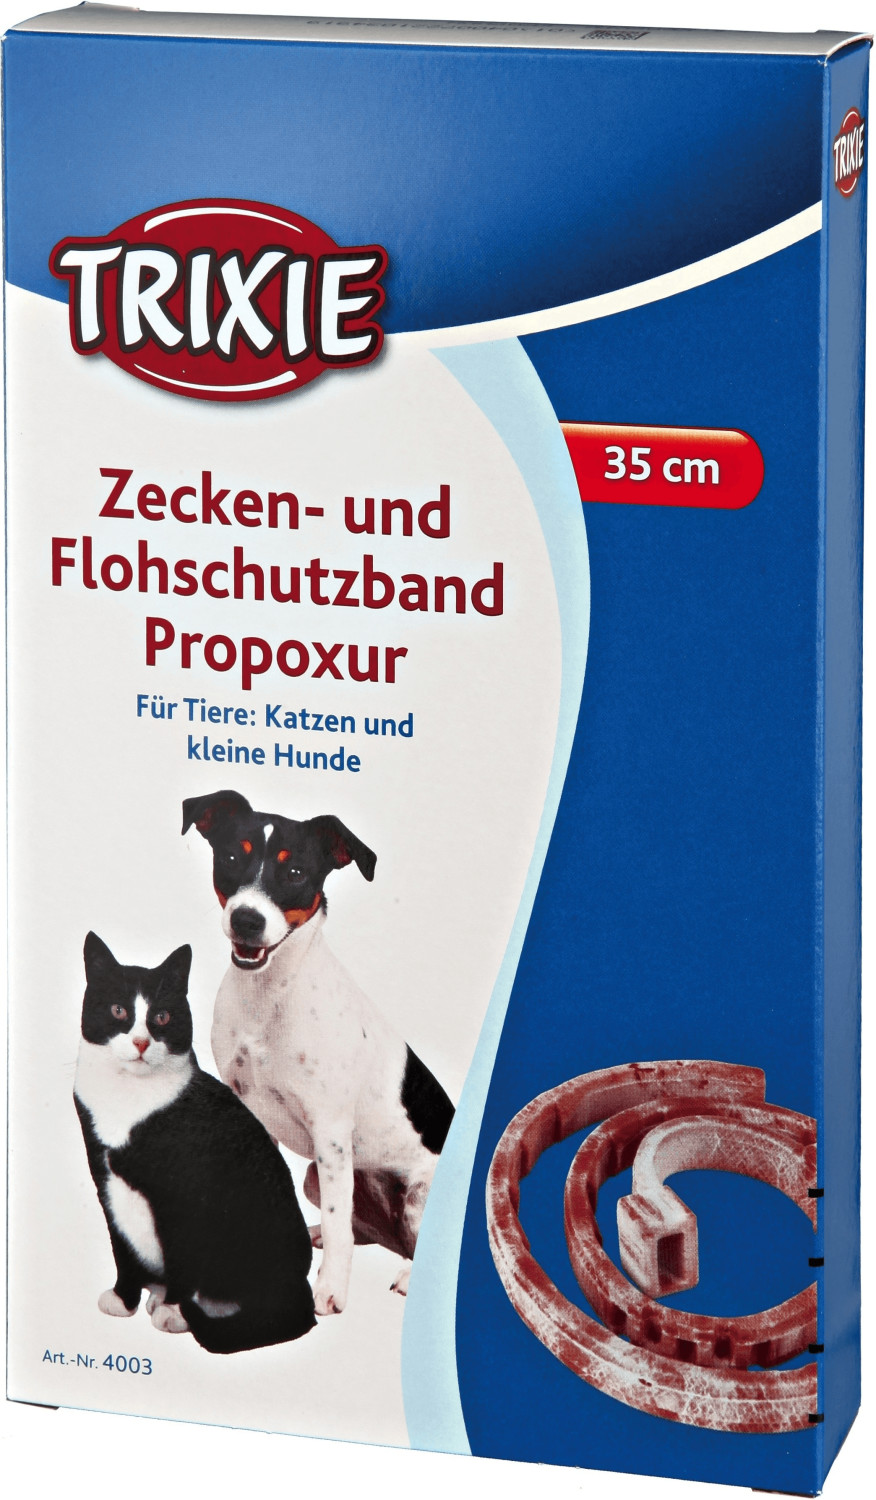 Trixie Flohschutzband ab 7,19 € Preisvergleich bei idealo.de